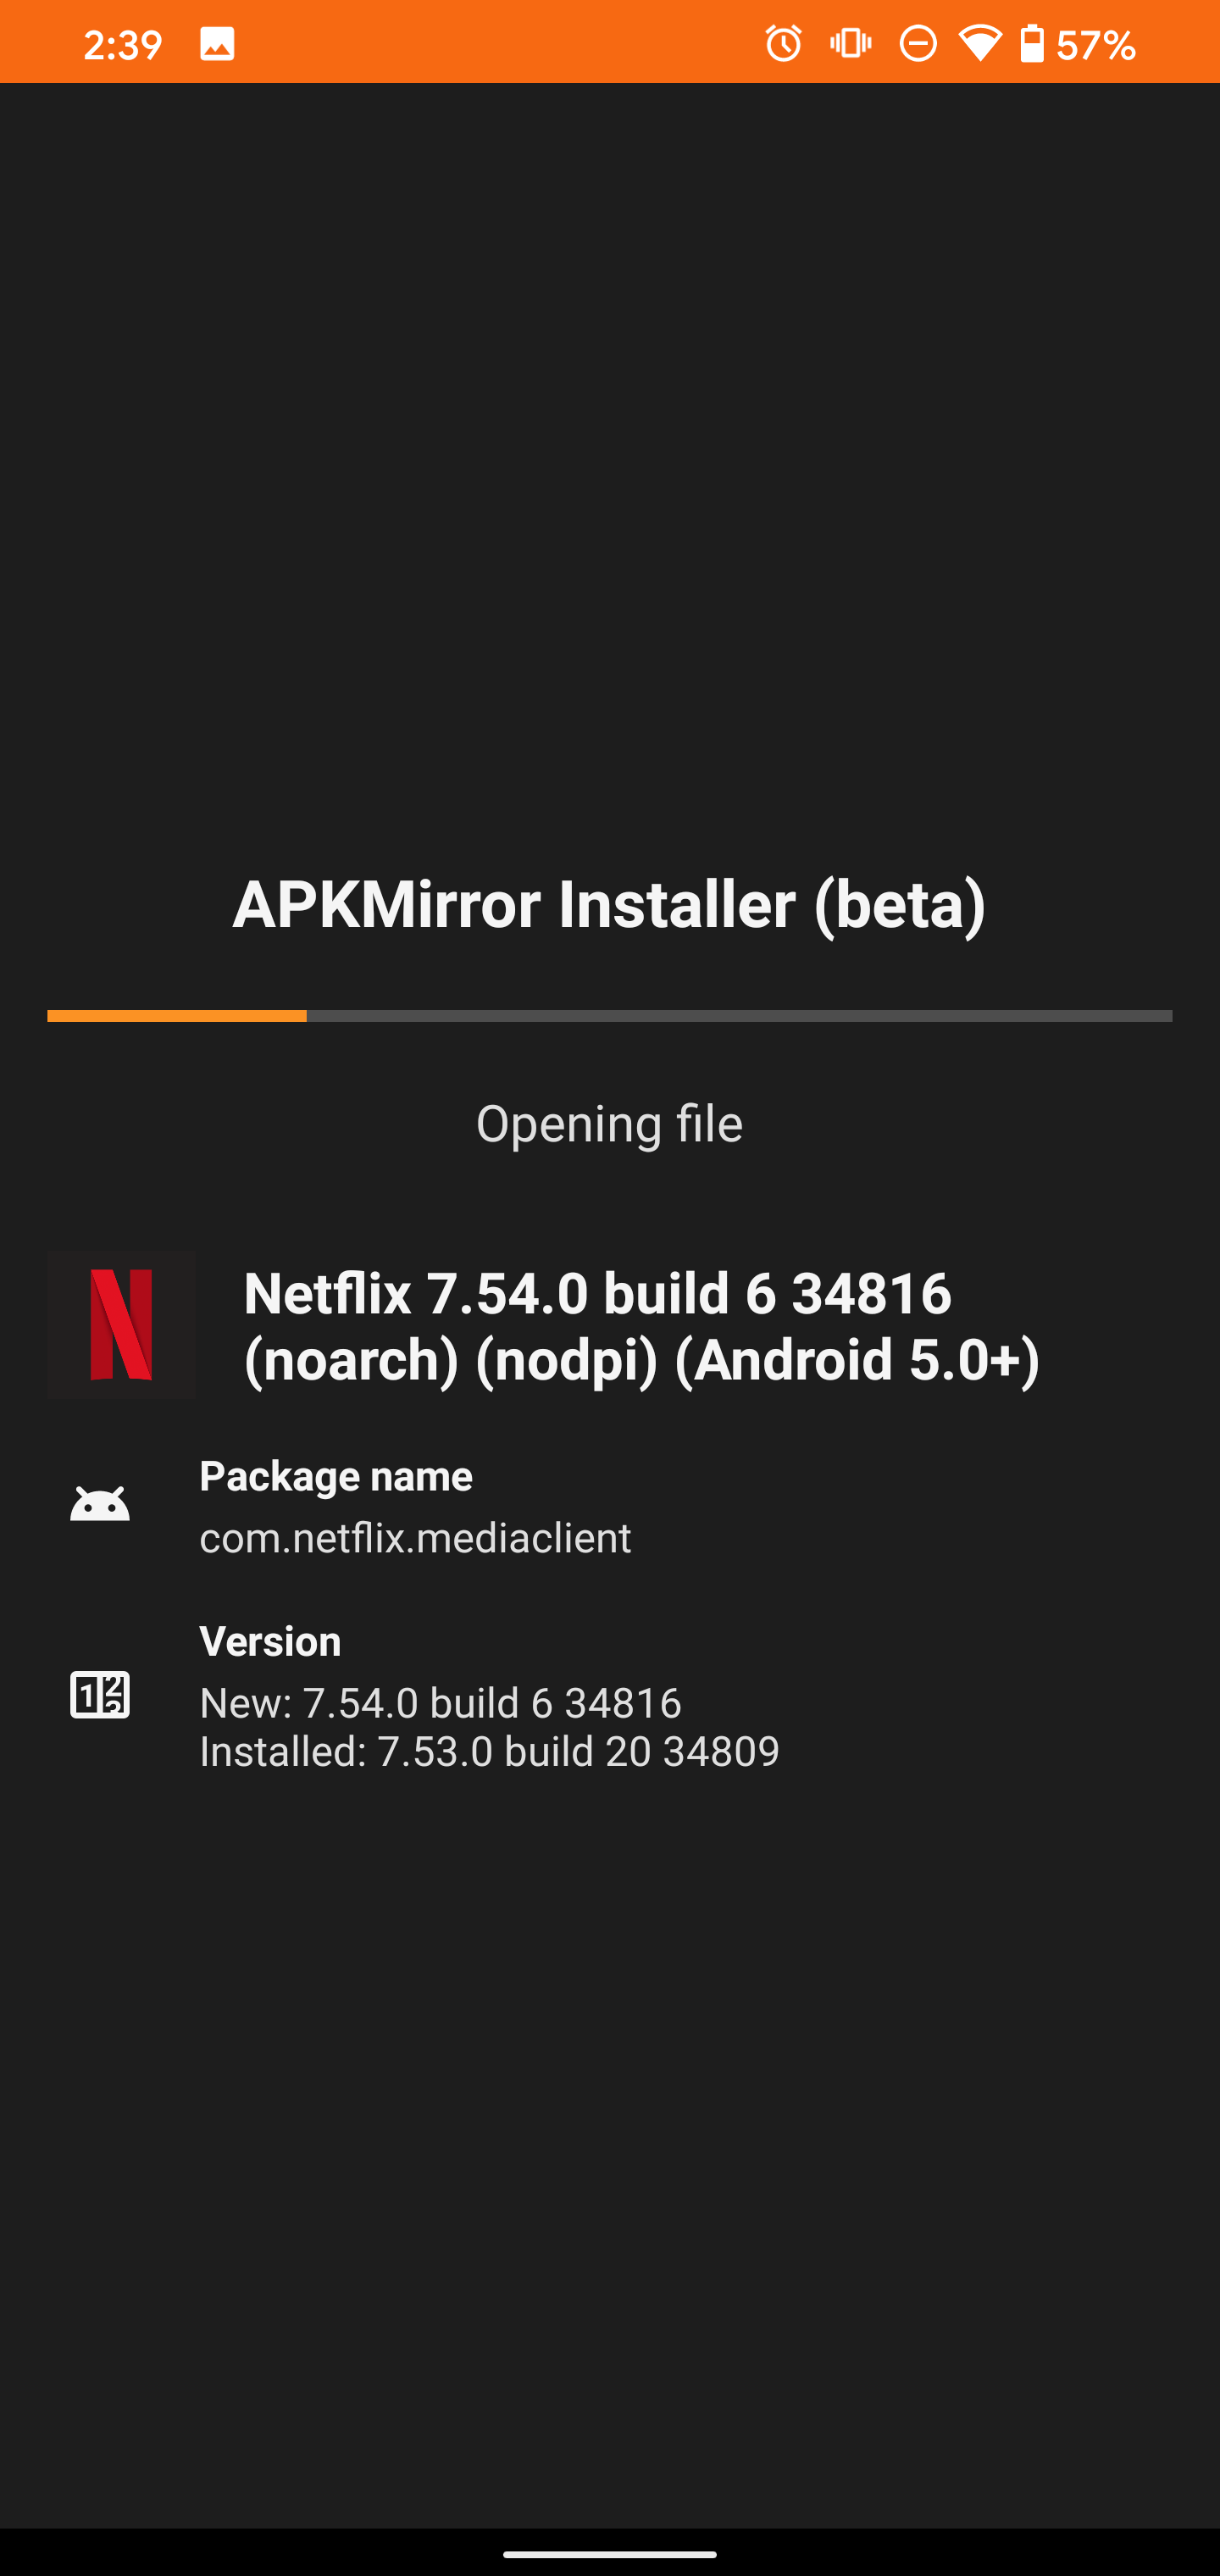 Screenshot of APK Mirror Installer installing Netflix